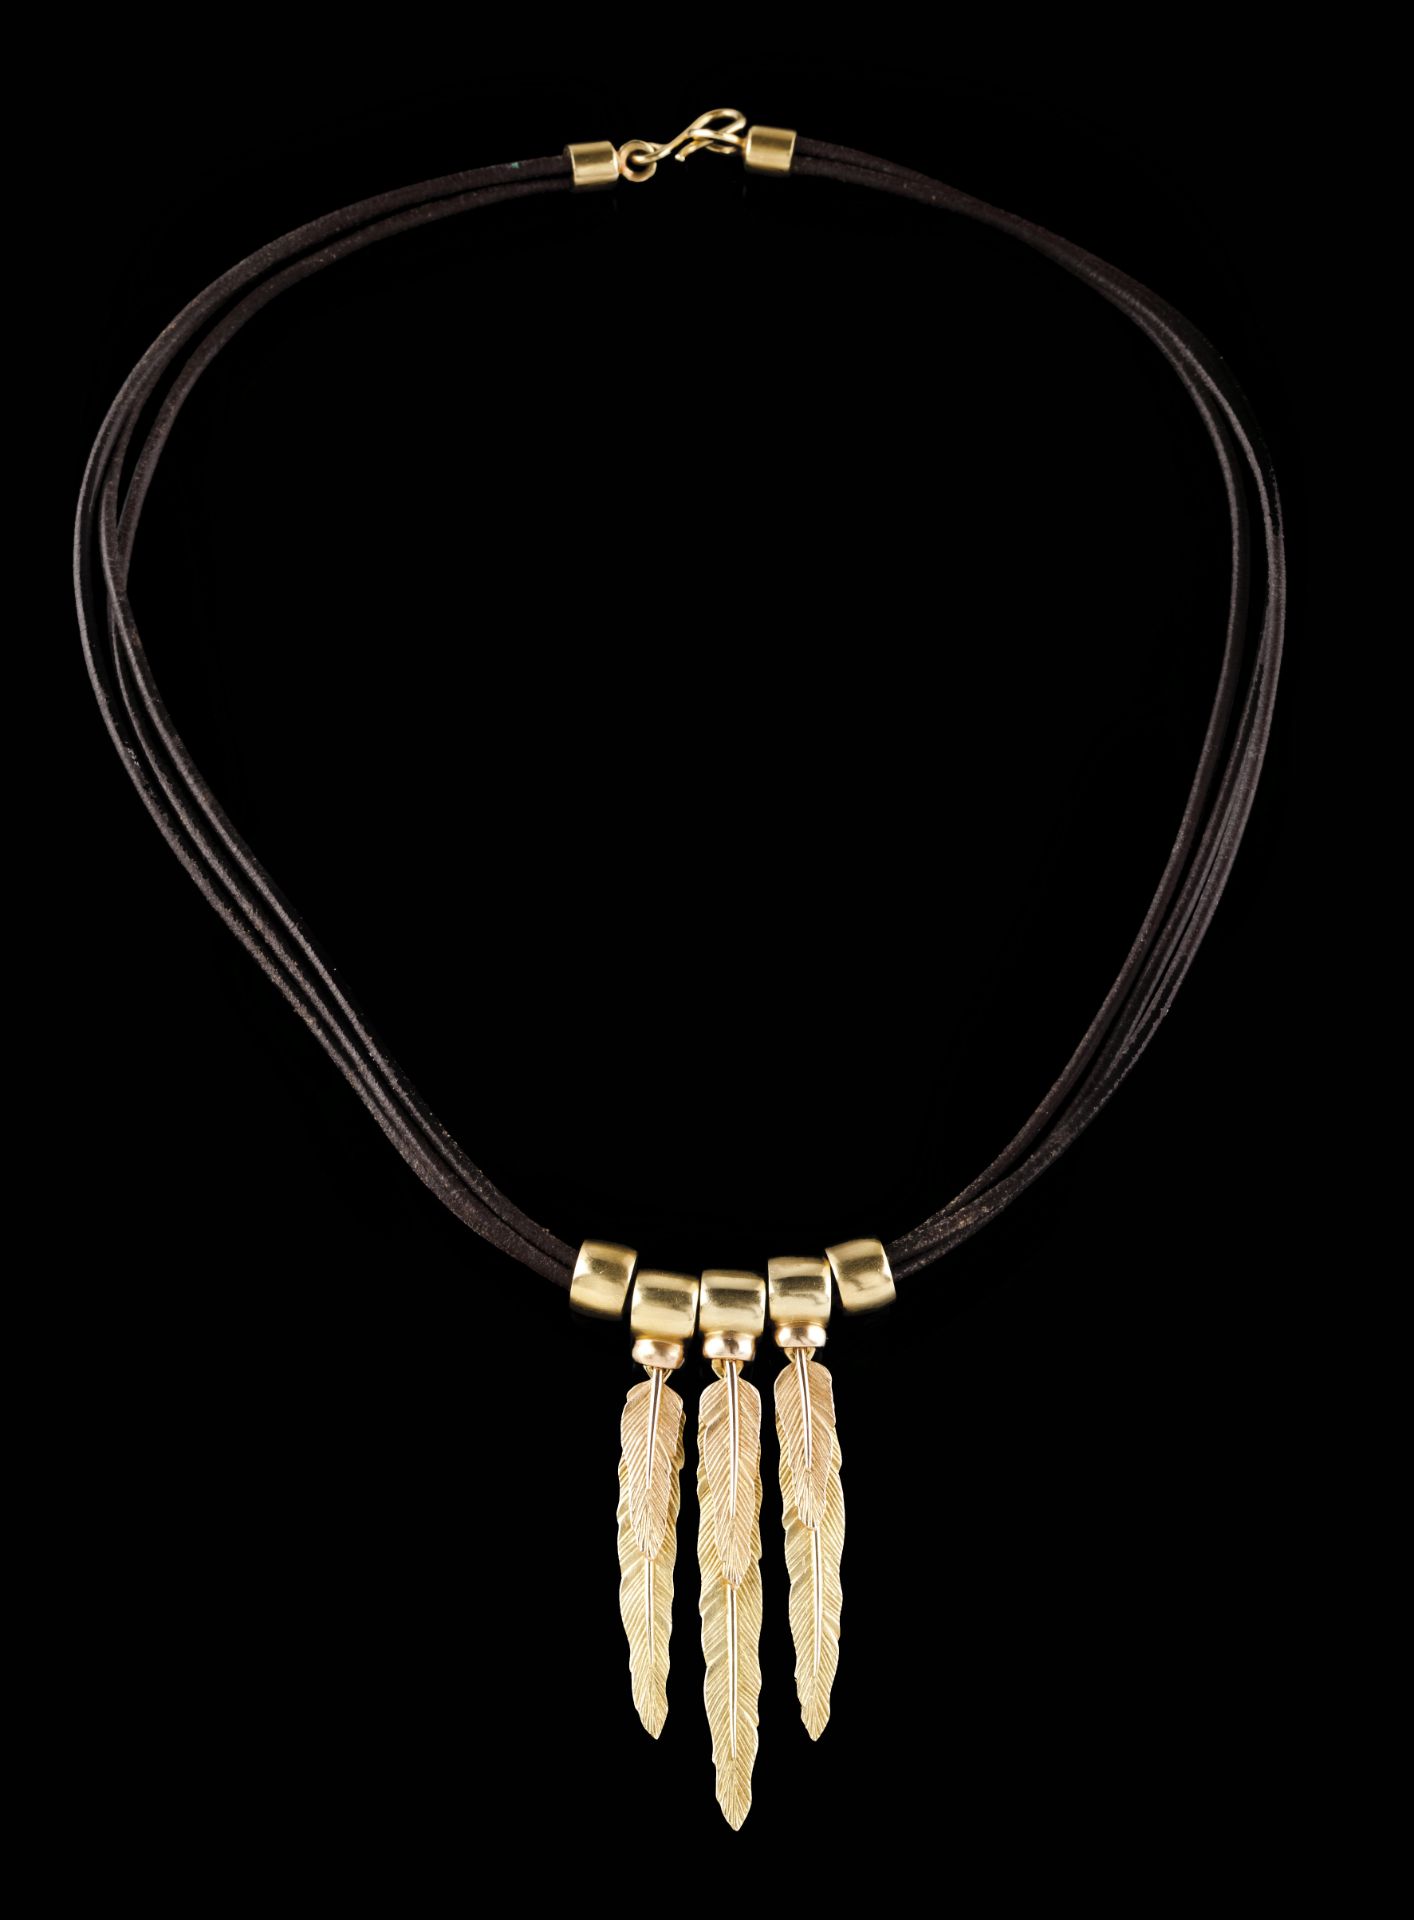 A H.Stern necklace